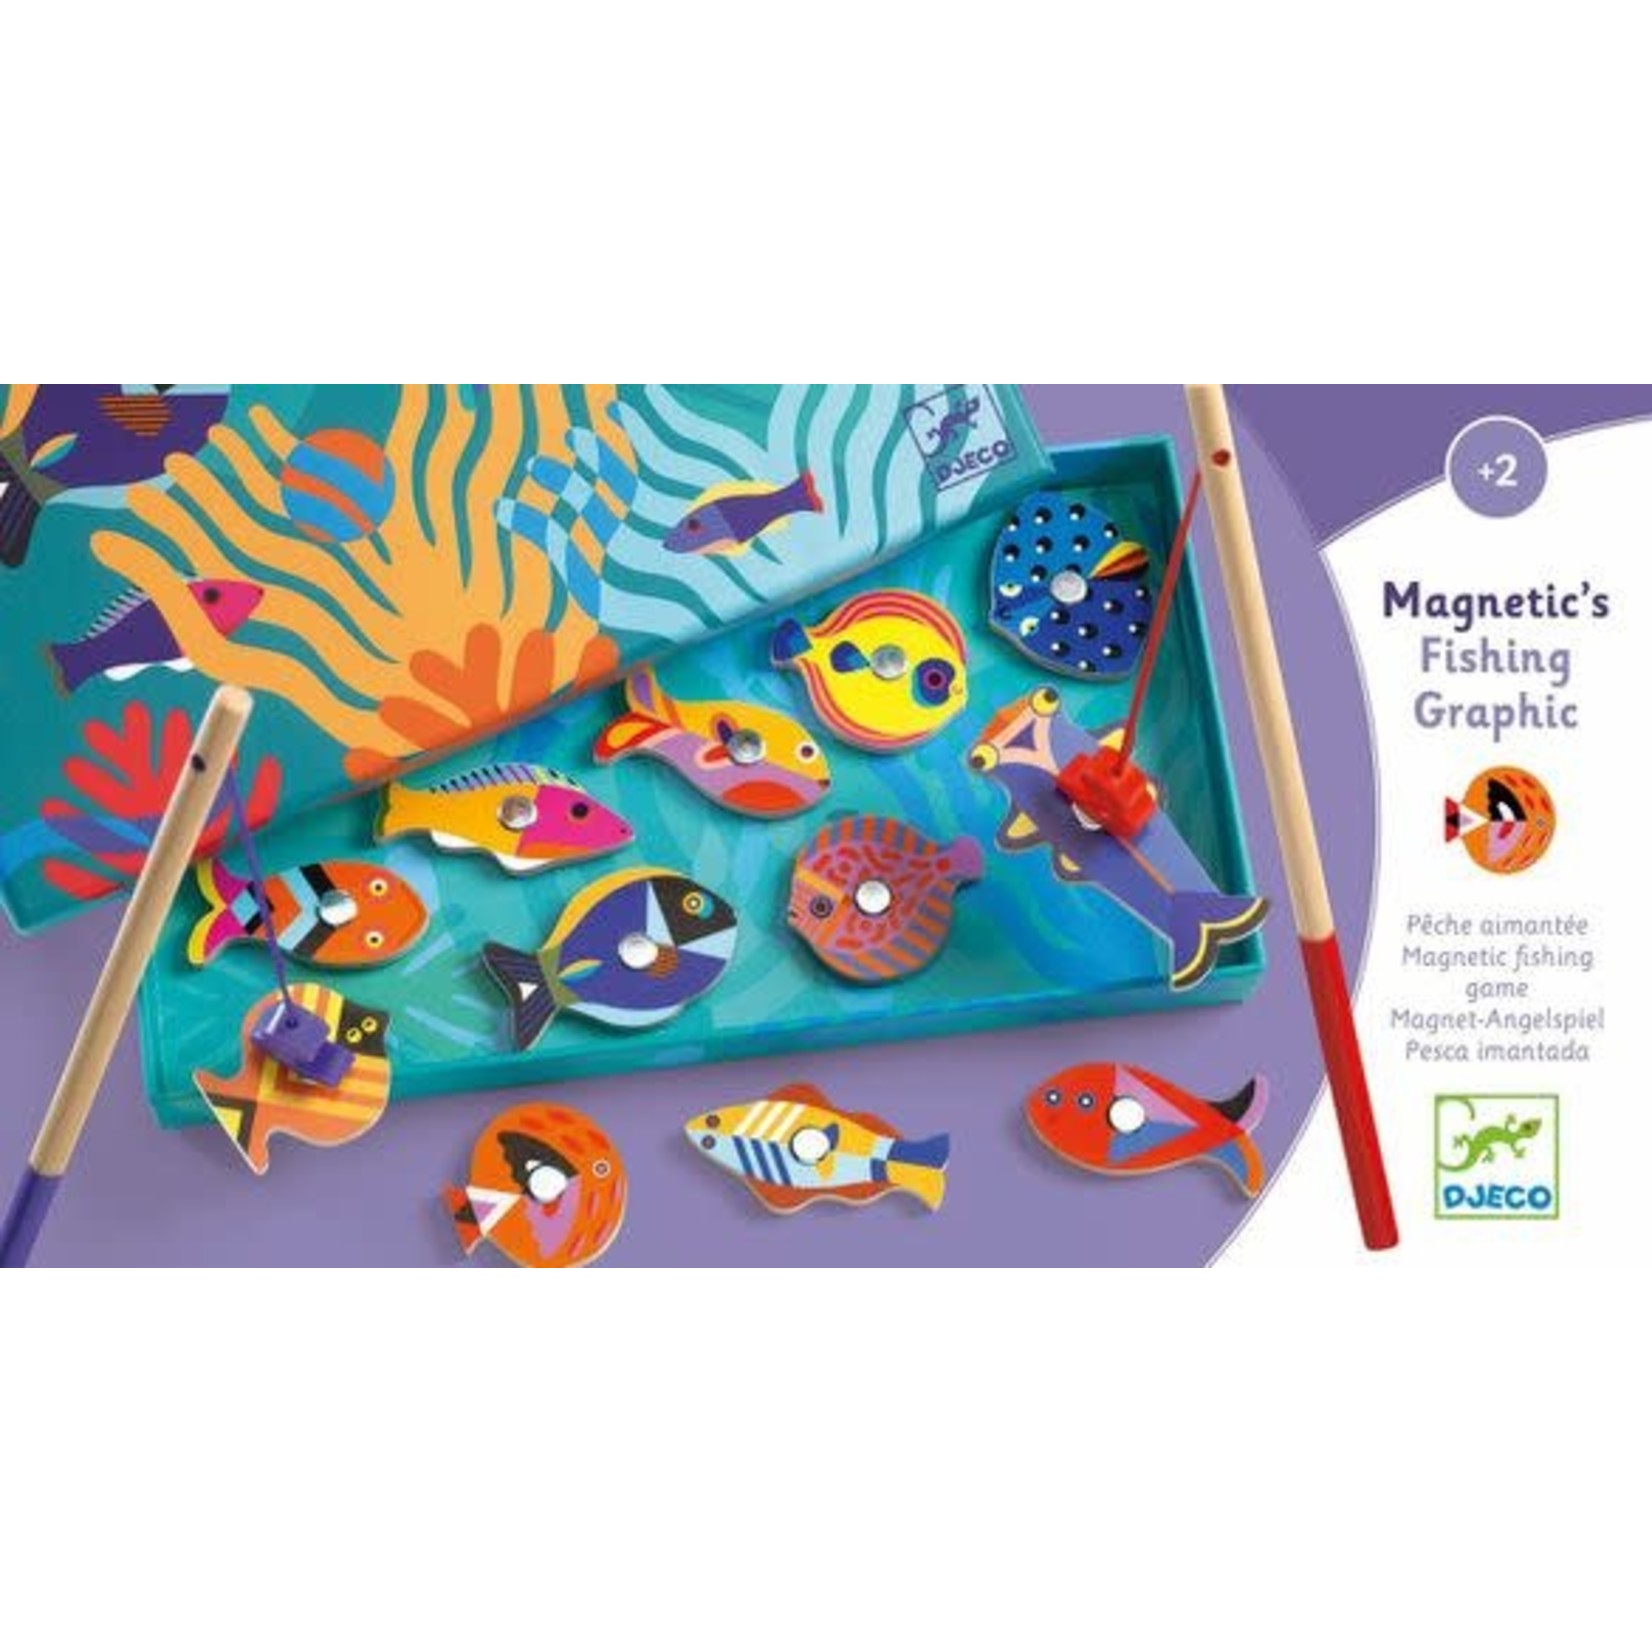 Djeco DJECO - Magnetic Fishing Game 'Graphic'